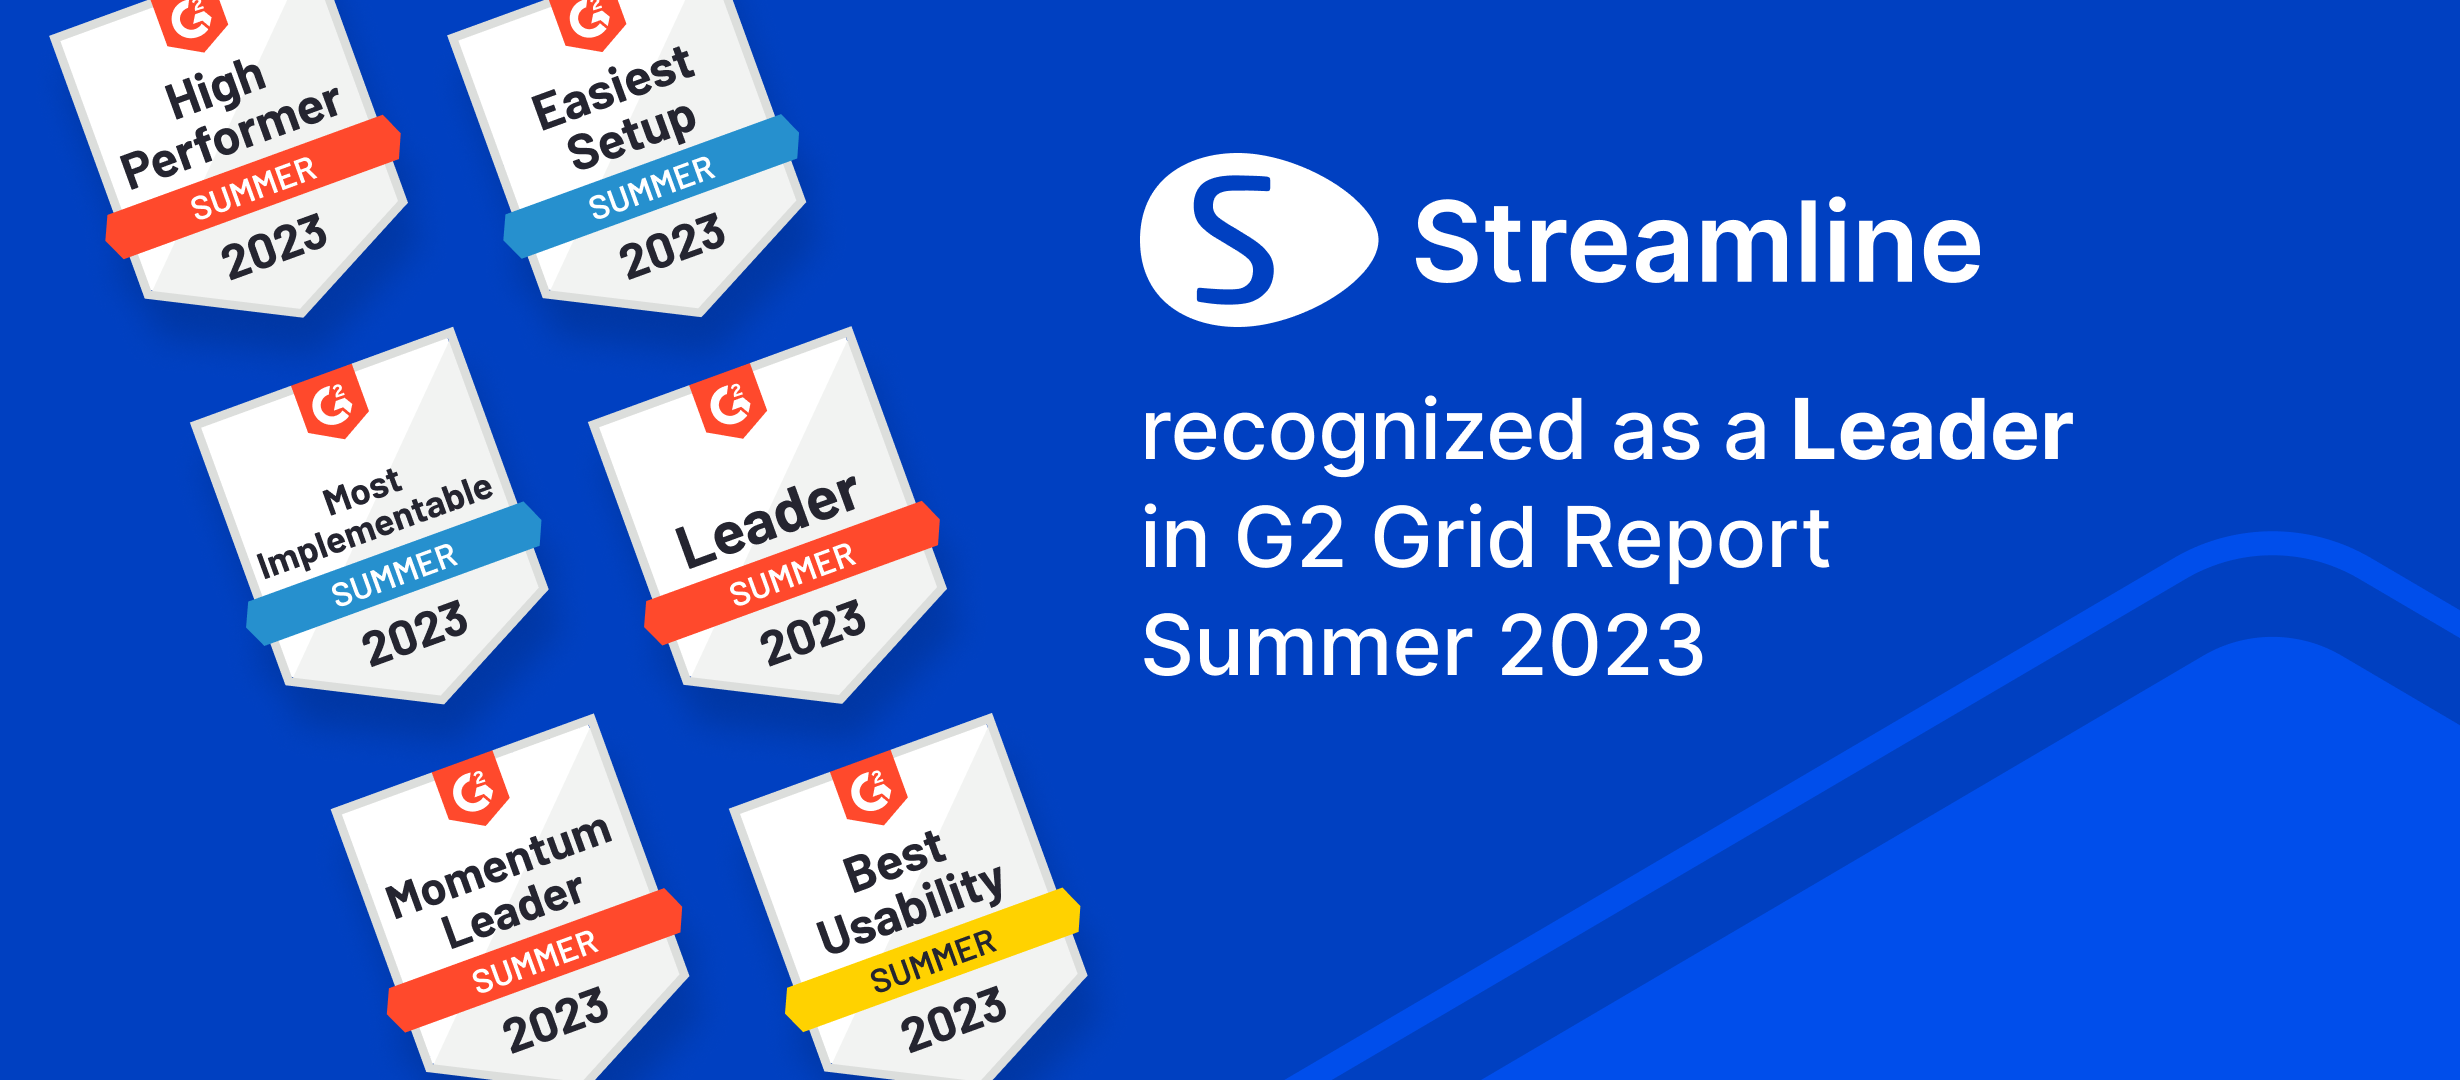 GMDH Streamline named a Leader across Multiple Categories in G2 Summer’23 Reports